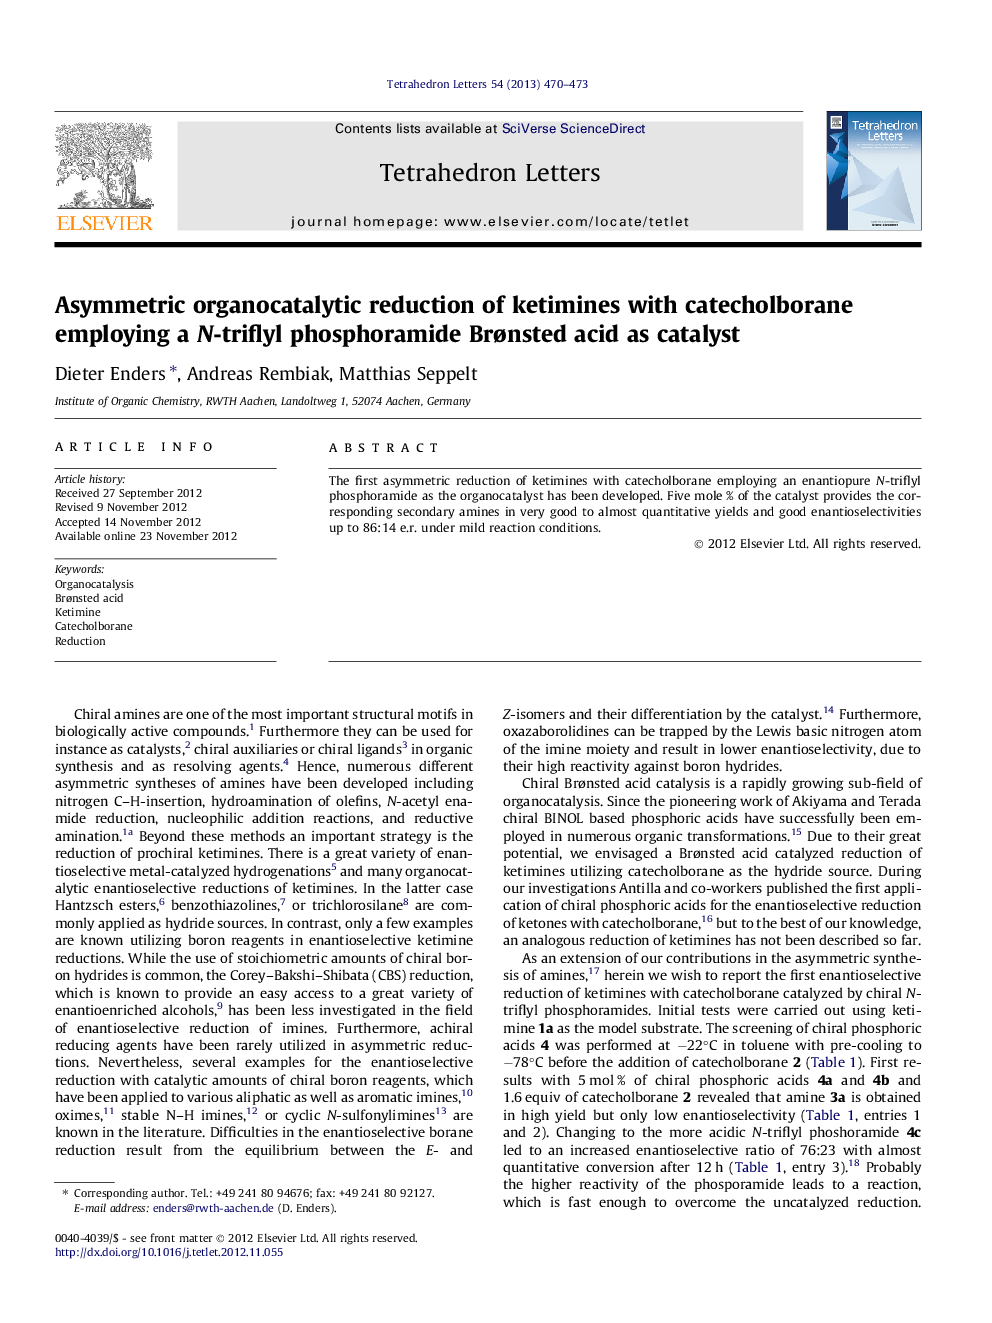 Asymmetric organocatalytic reduction of ketimines with catecholborane employing a N-triflyl phosphoramide BrÃ¸nsted acid as catalyst